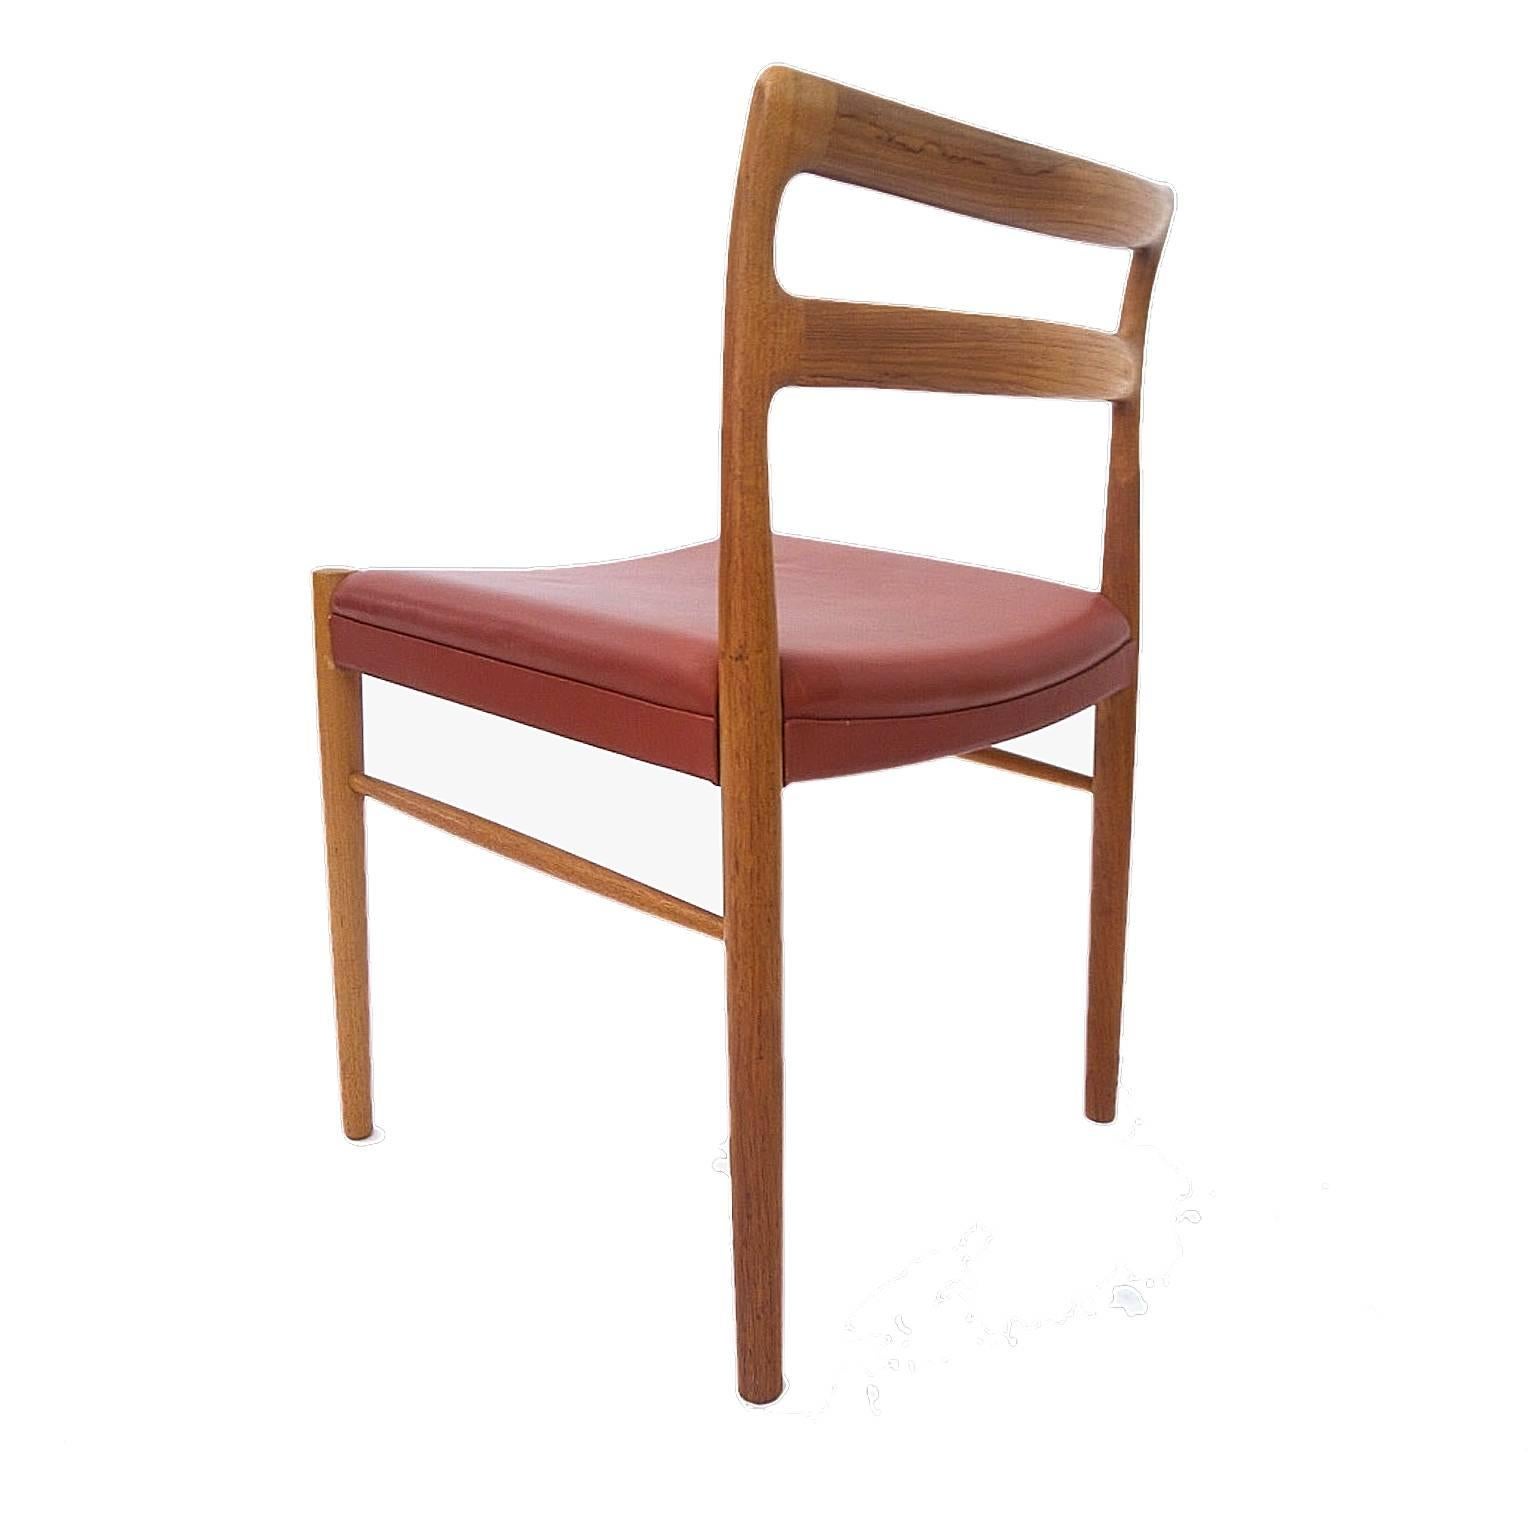 Six Danish Modern Sculptural Dining Chairs attr. H.W. Klein -Teak & Red Leather 1